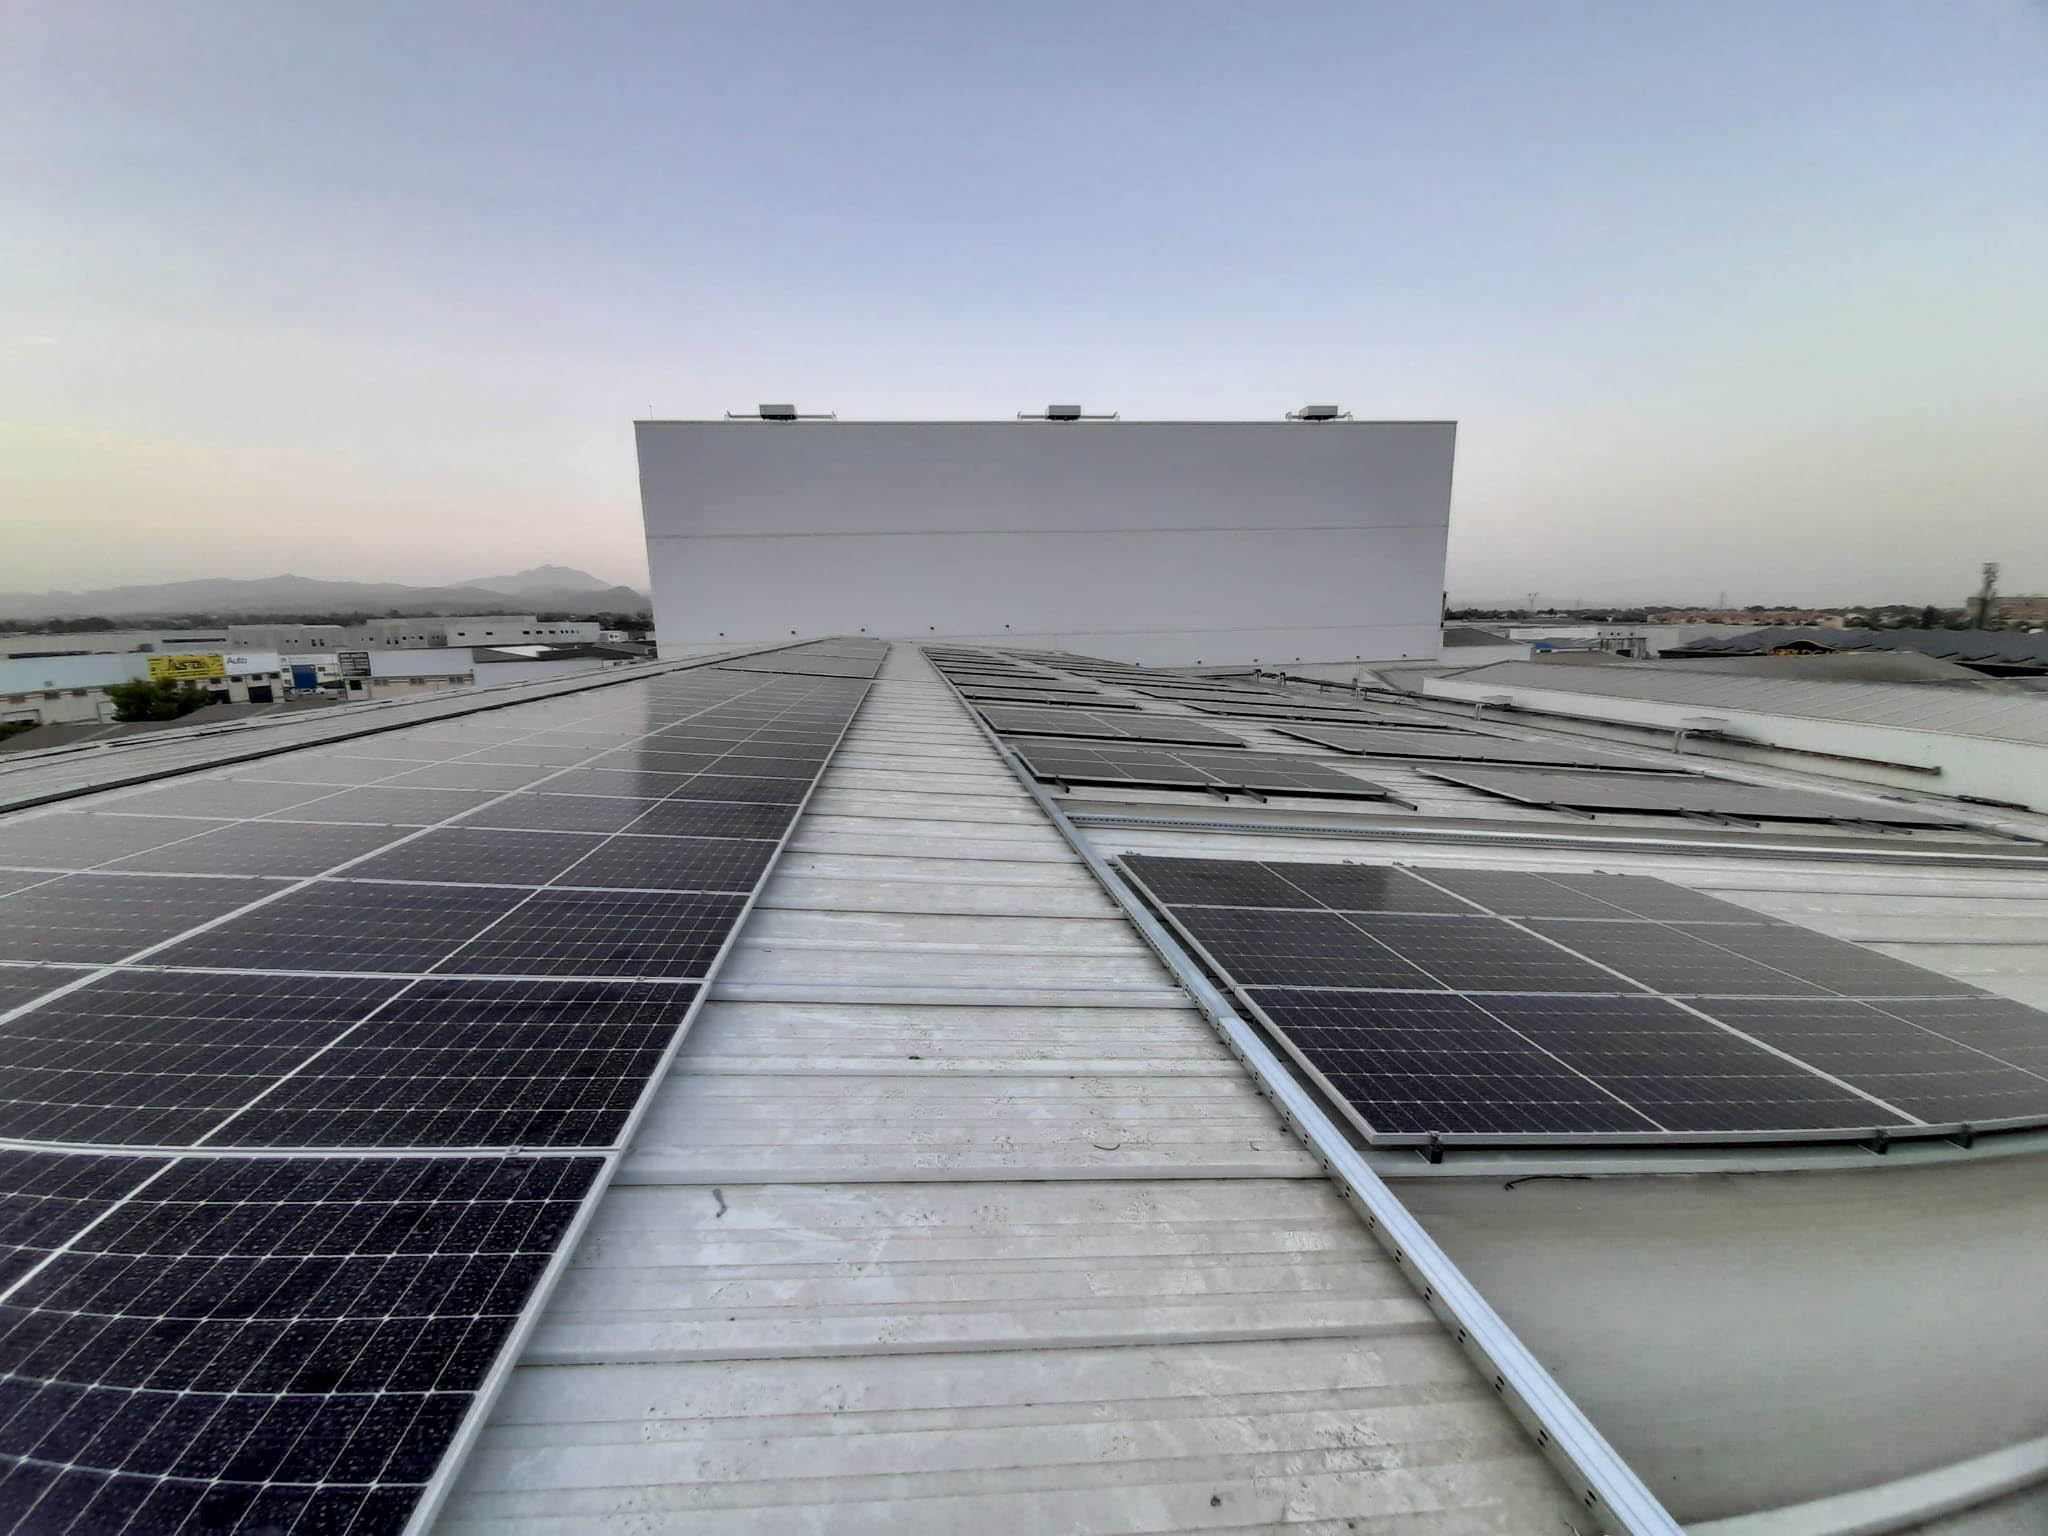 Alicante autoconsumo solar